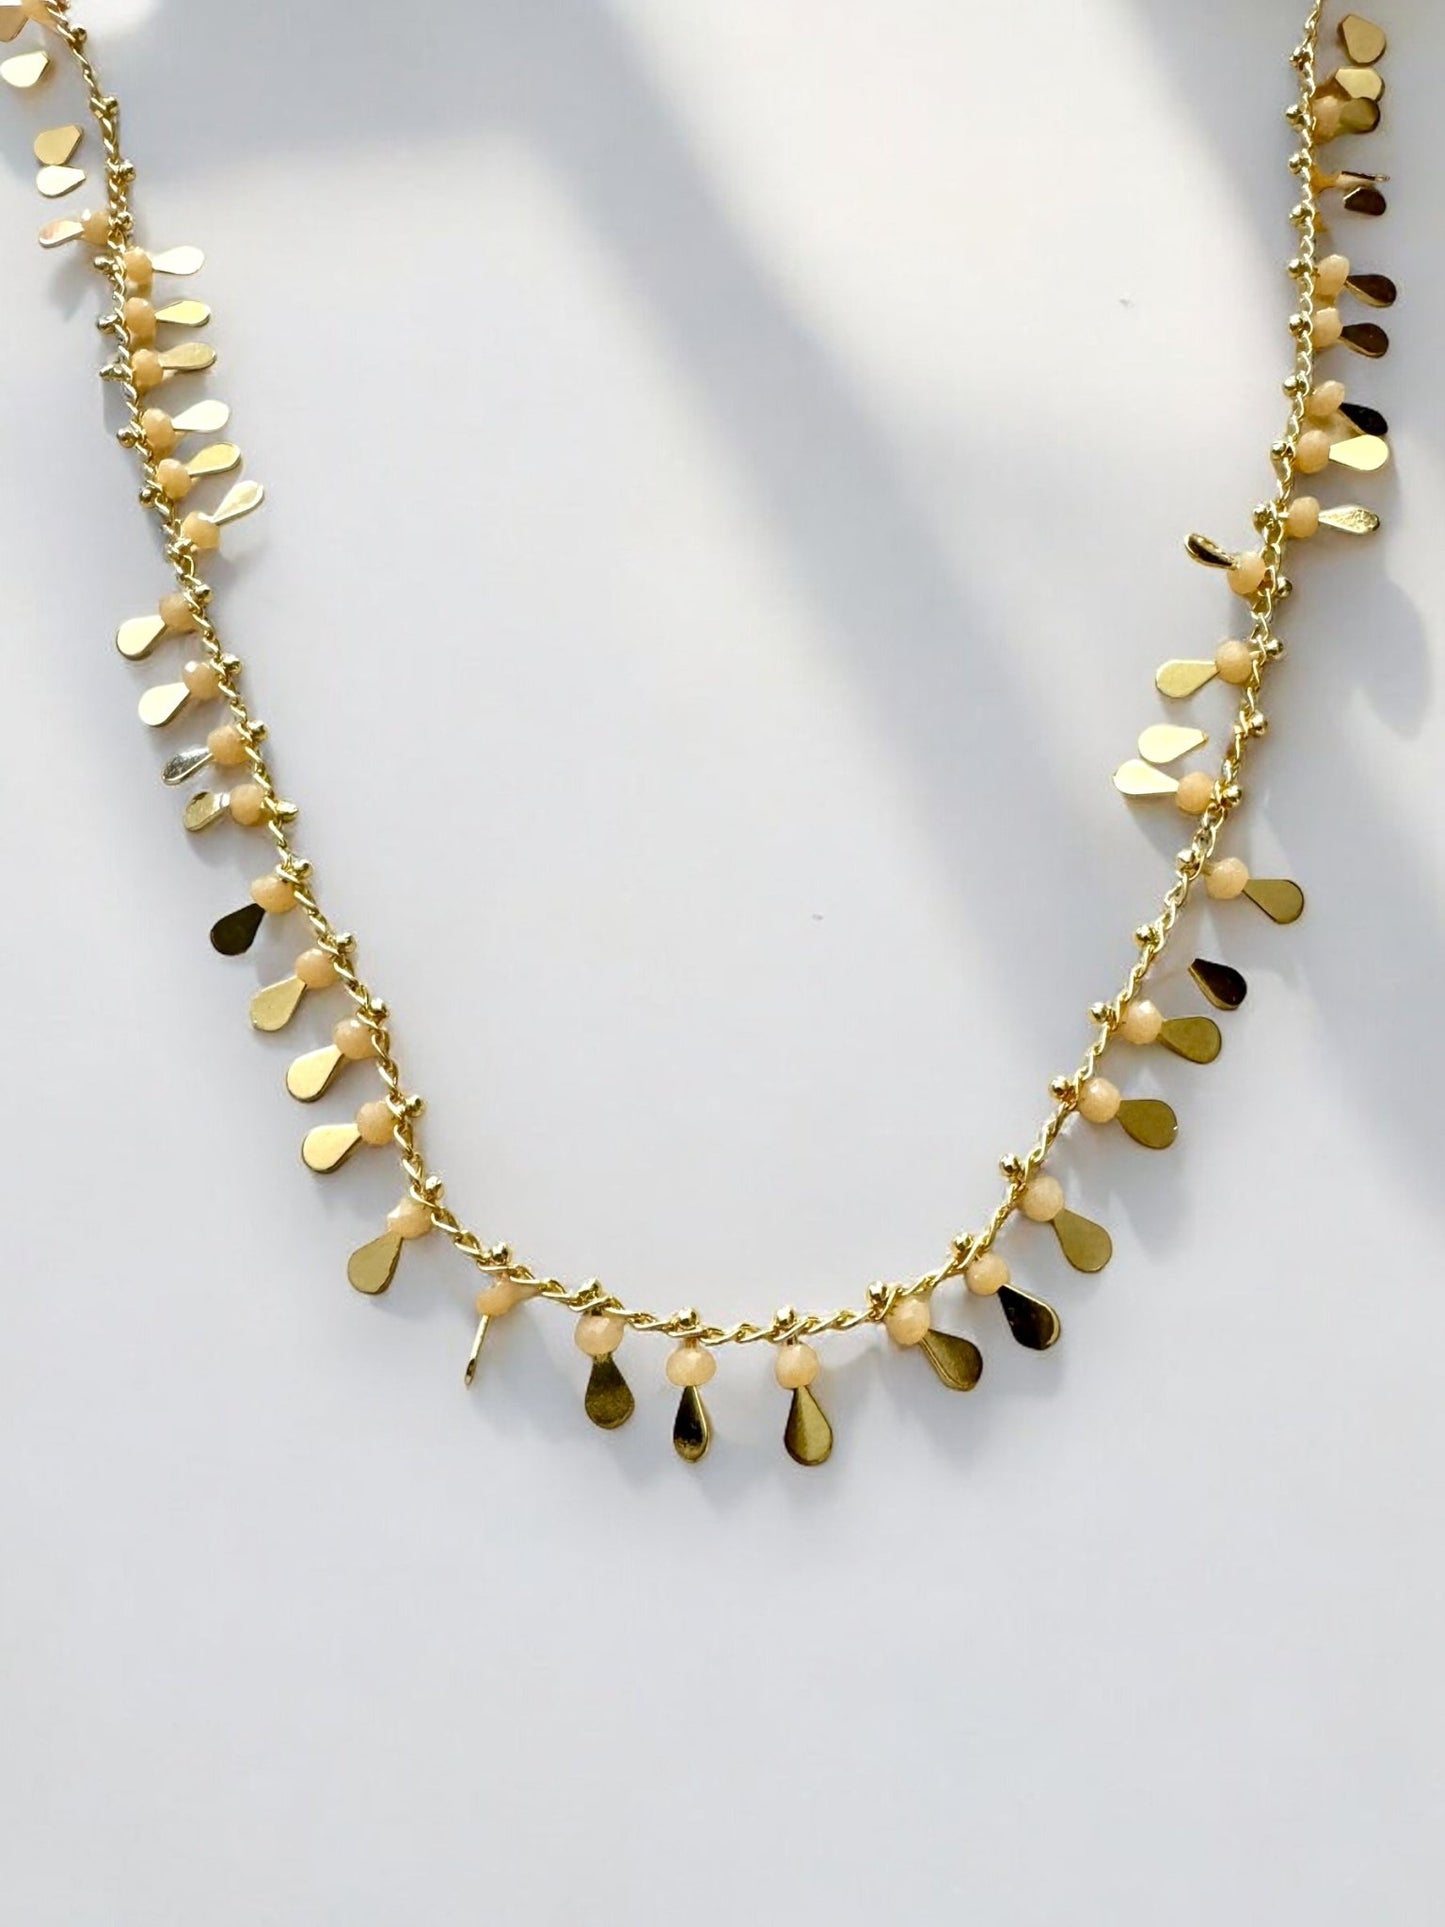 Confetti necklace - GOLDEN HOUR studio